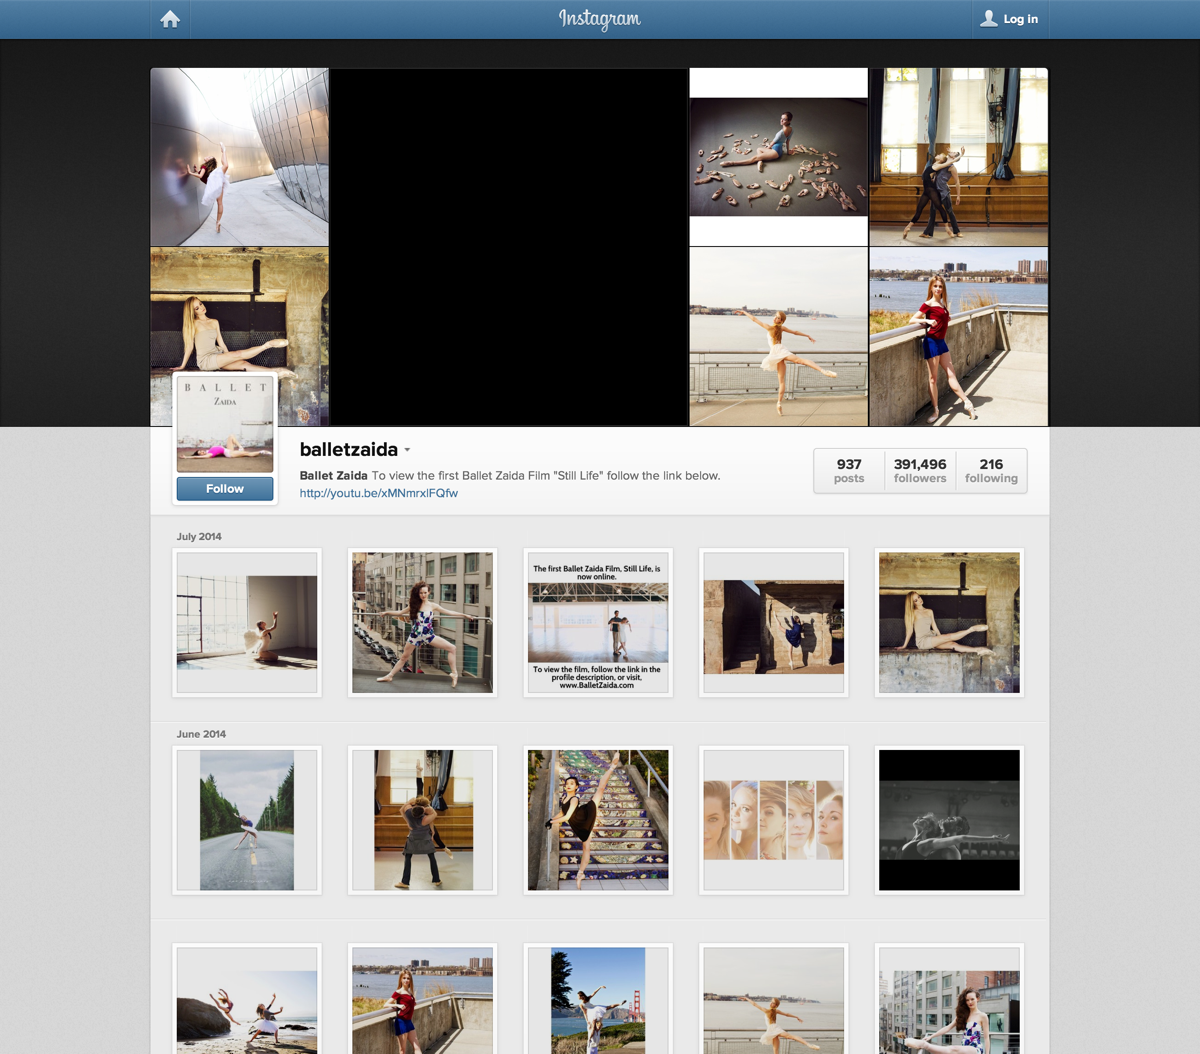 balletzaida on Instagram (20140702)